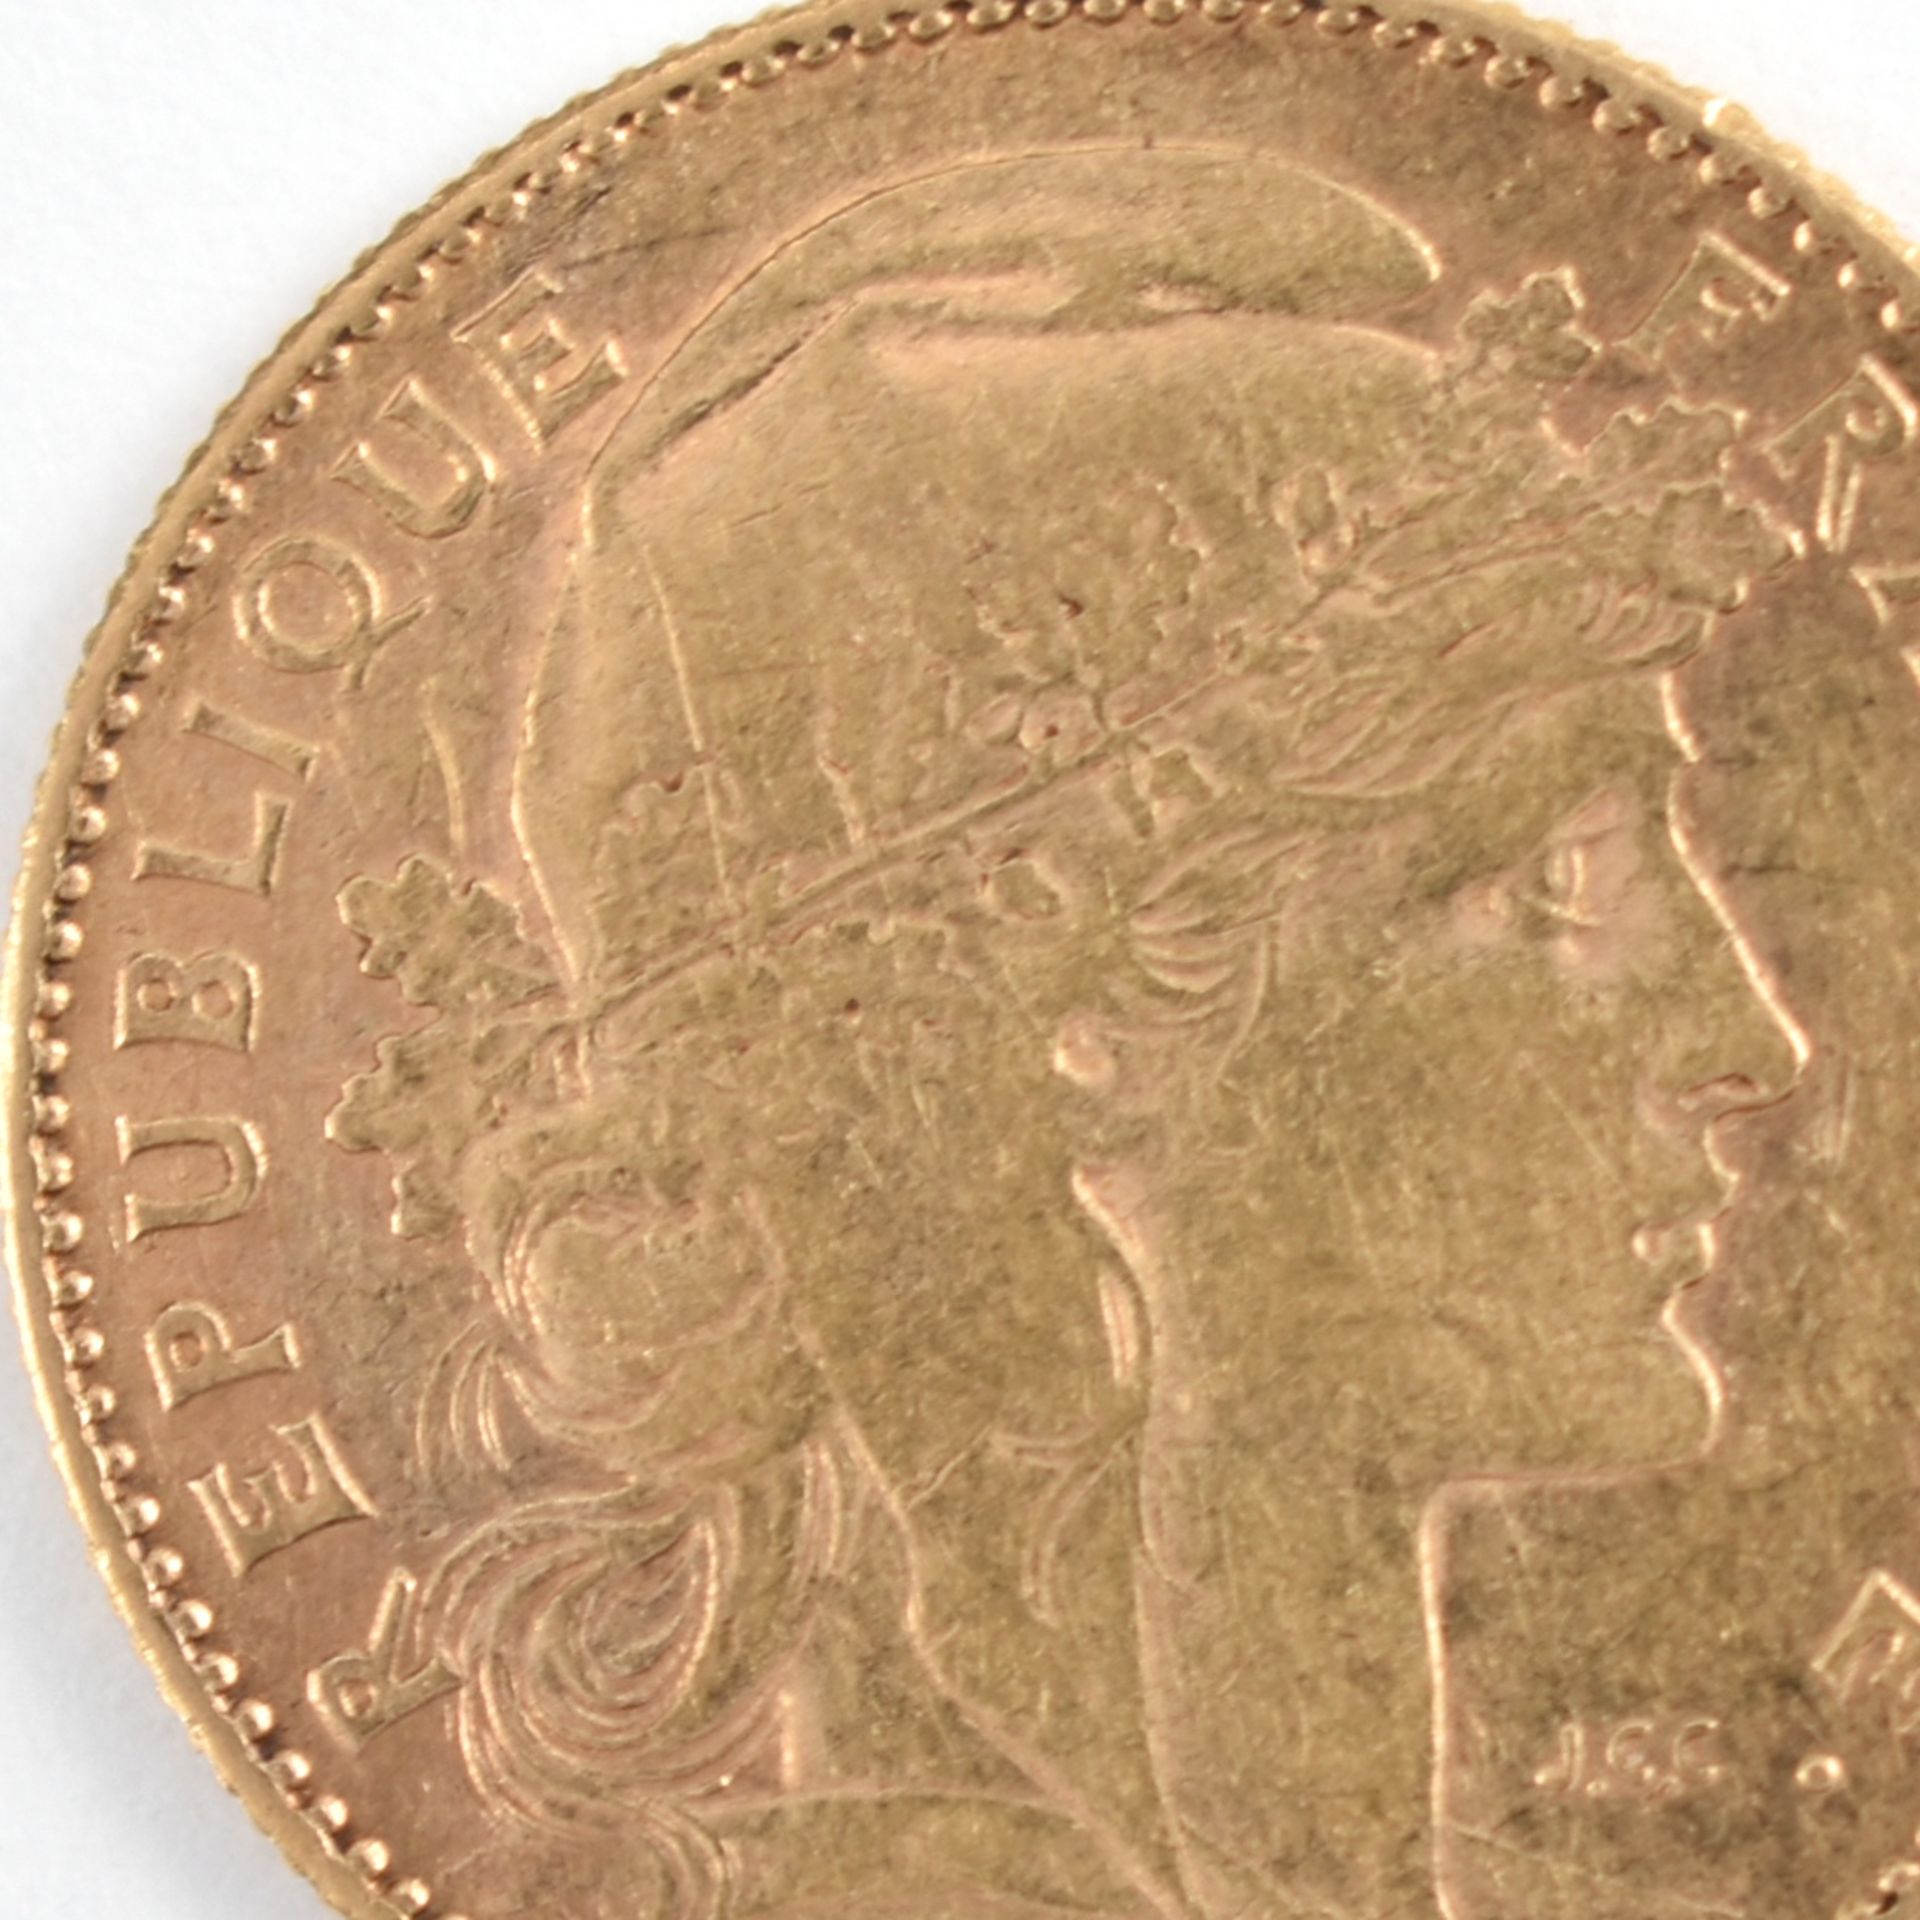 Goldmünze Frankreich 1901 10 Francs in Gold, 900/1000, 3,23 g, D ca. 18,9 mm, av. Marianne Kopf